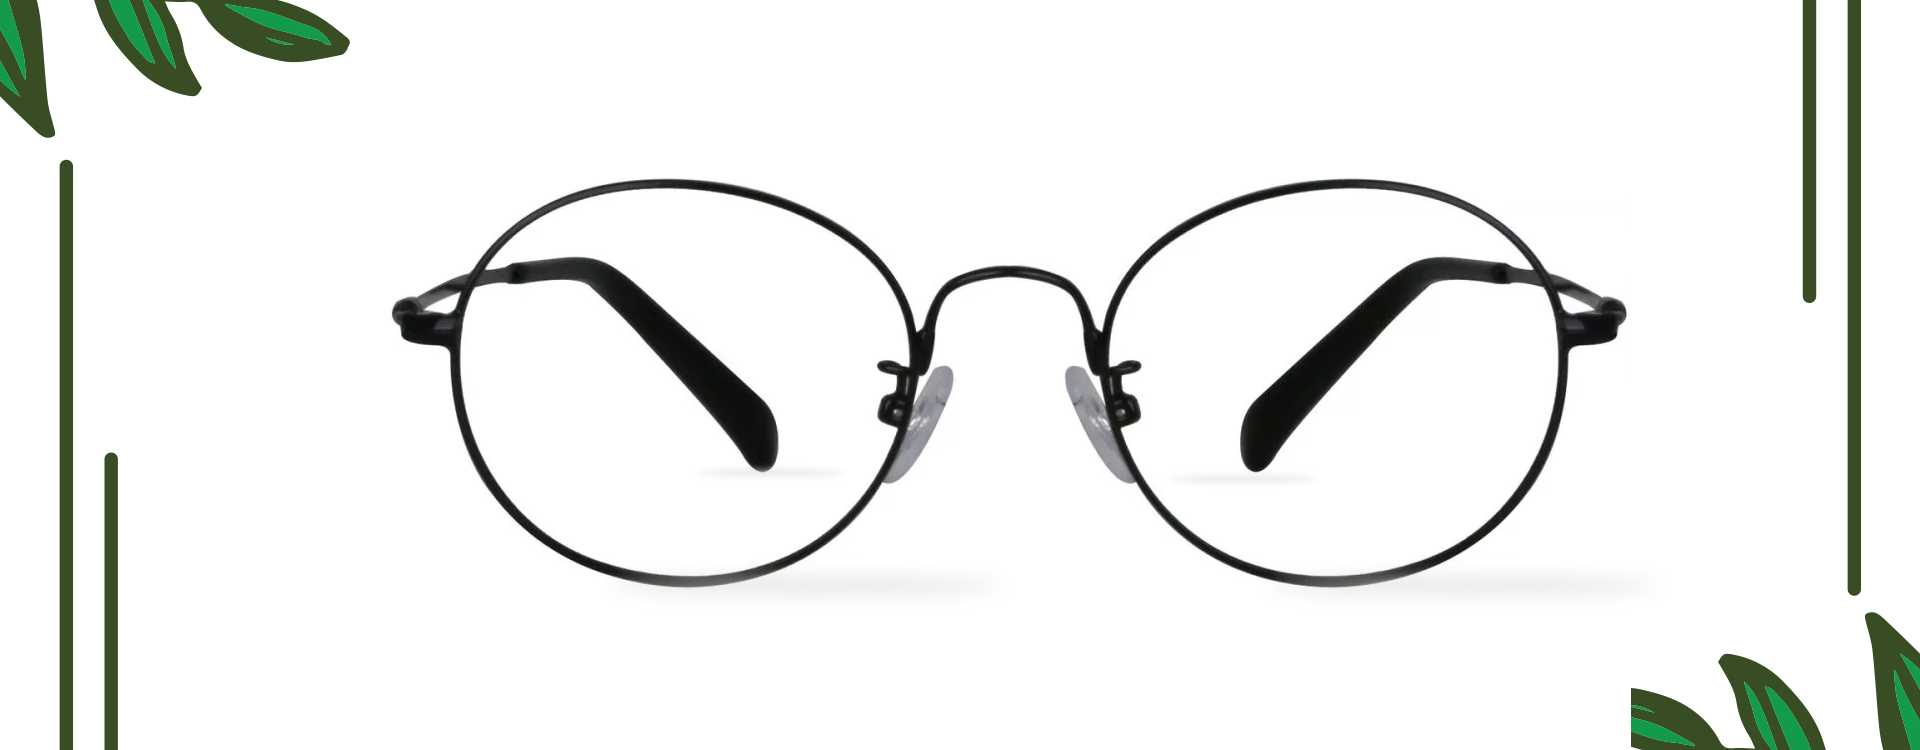 Buy Round Glasses at Goggles4U